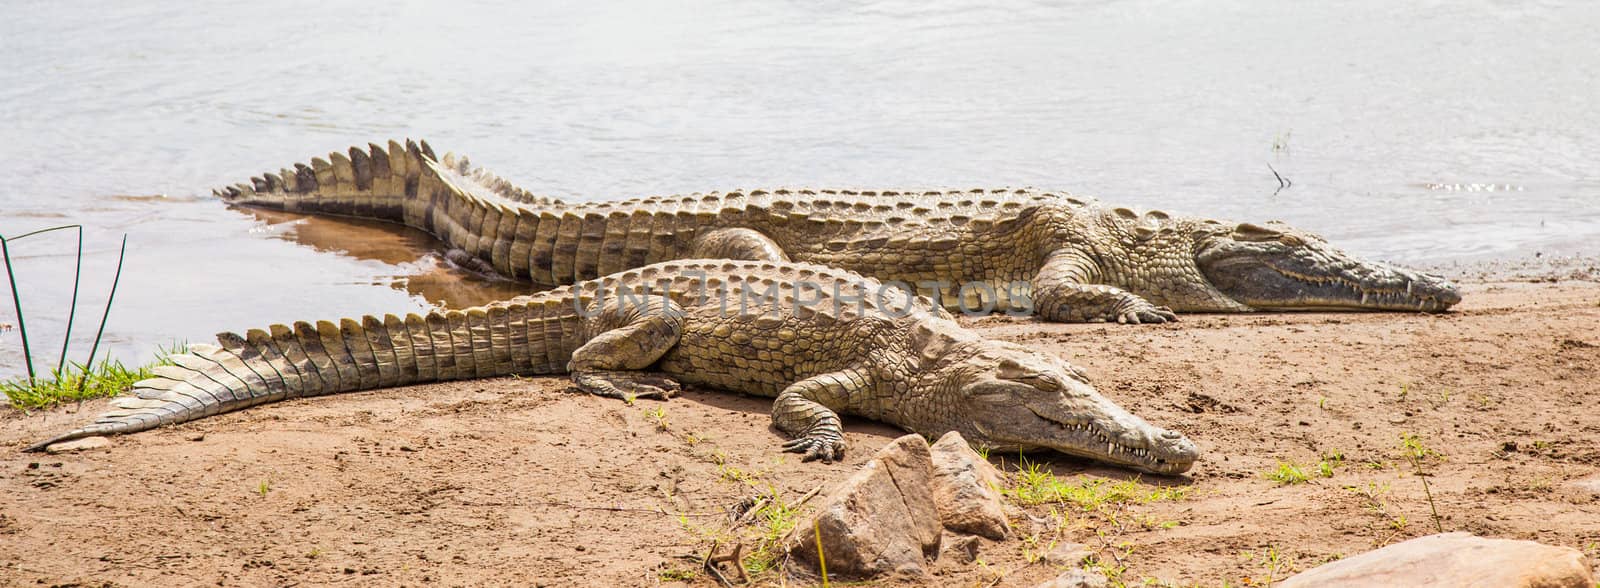 Kenya, Tsavo East National Park. Crocodiles  joining the last sun before the sunset